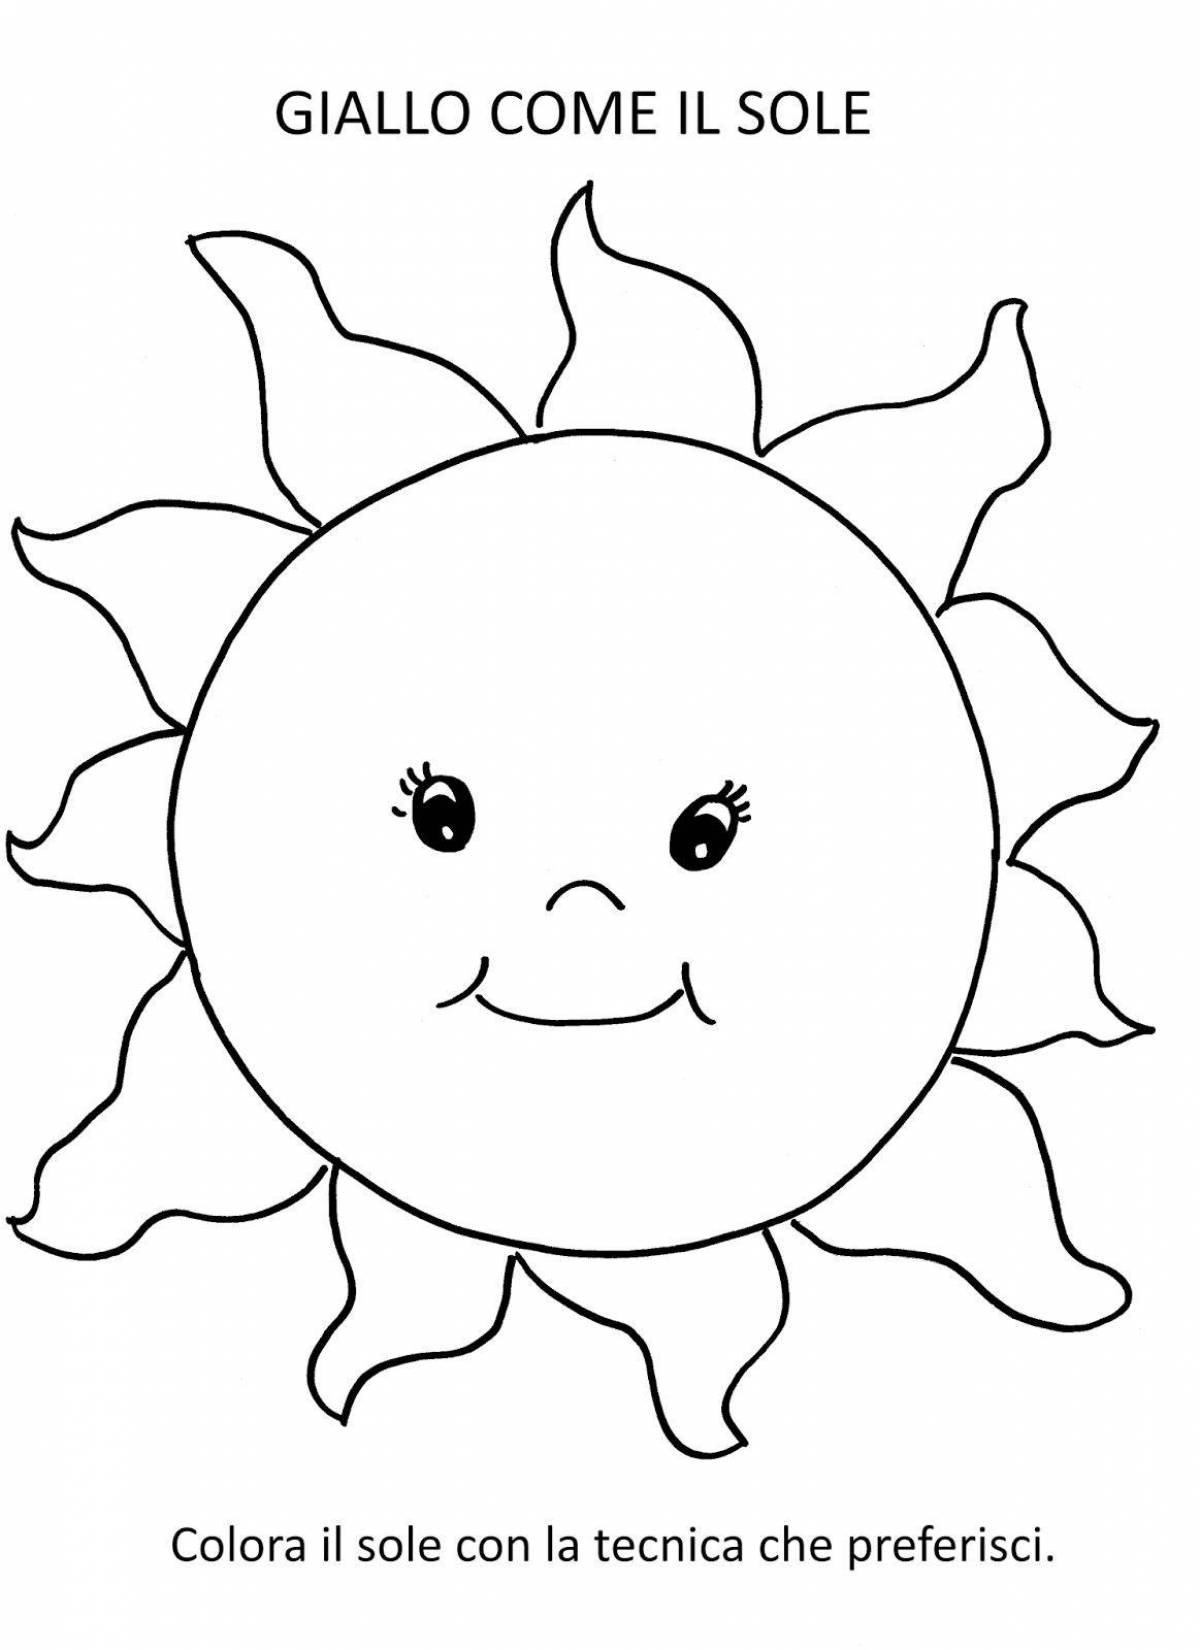 Изысканная раскраска солнце для детей 3-4 лет